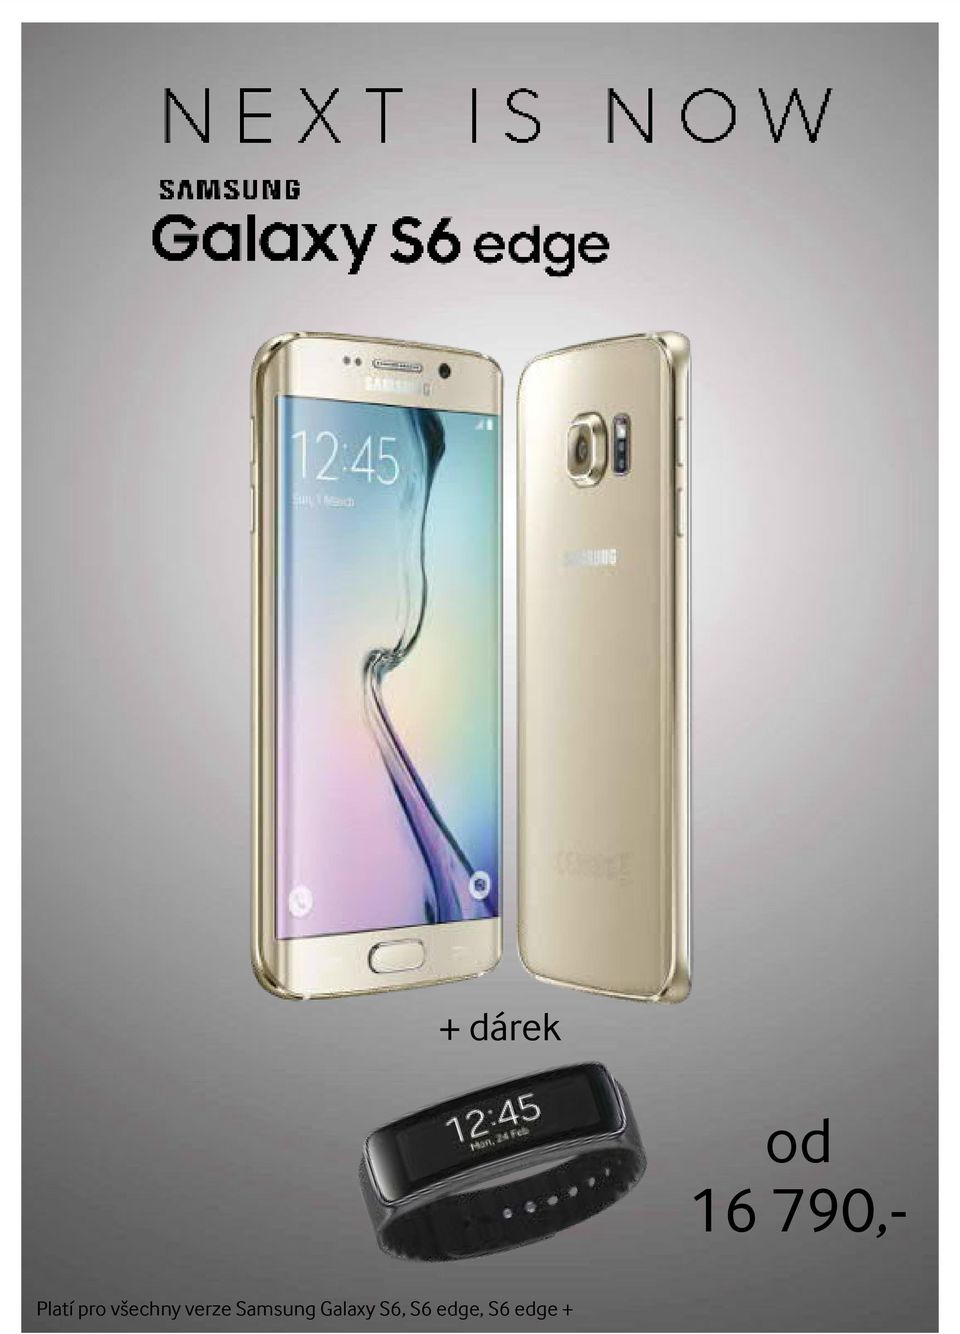 verze Samsung Galaxy